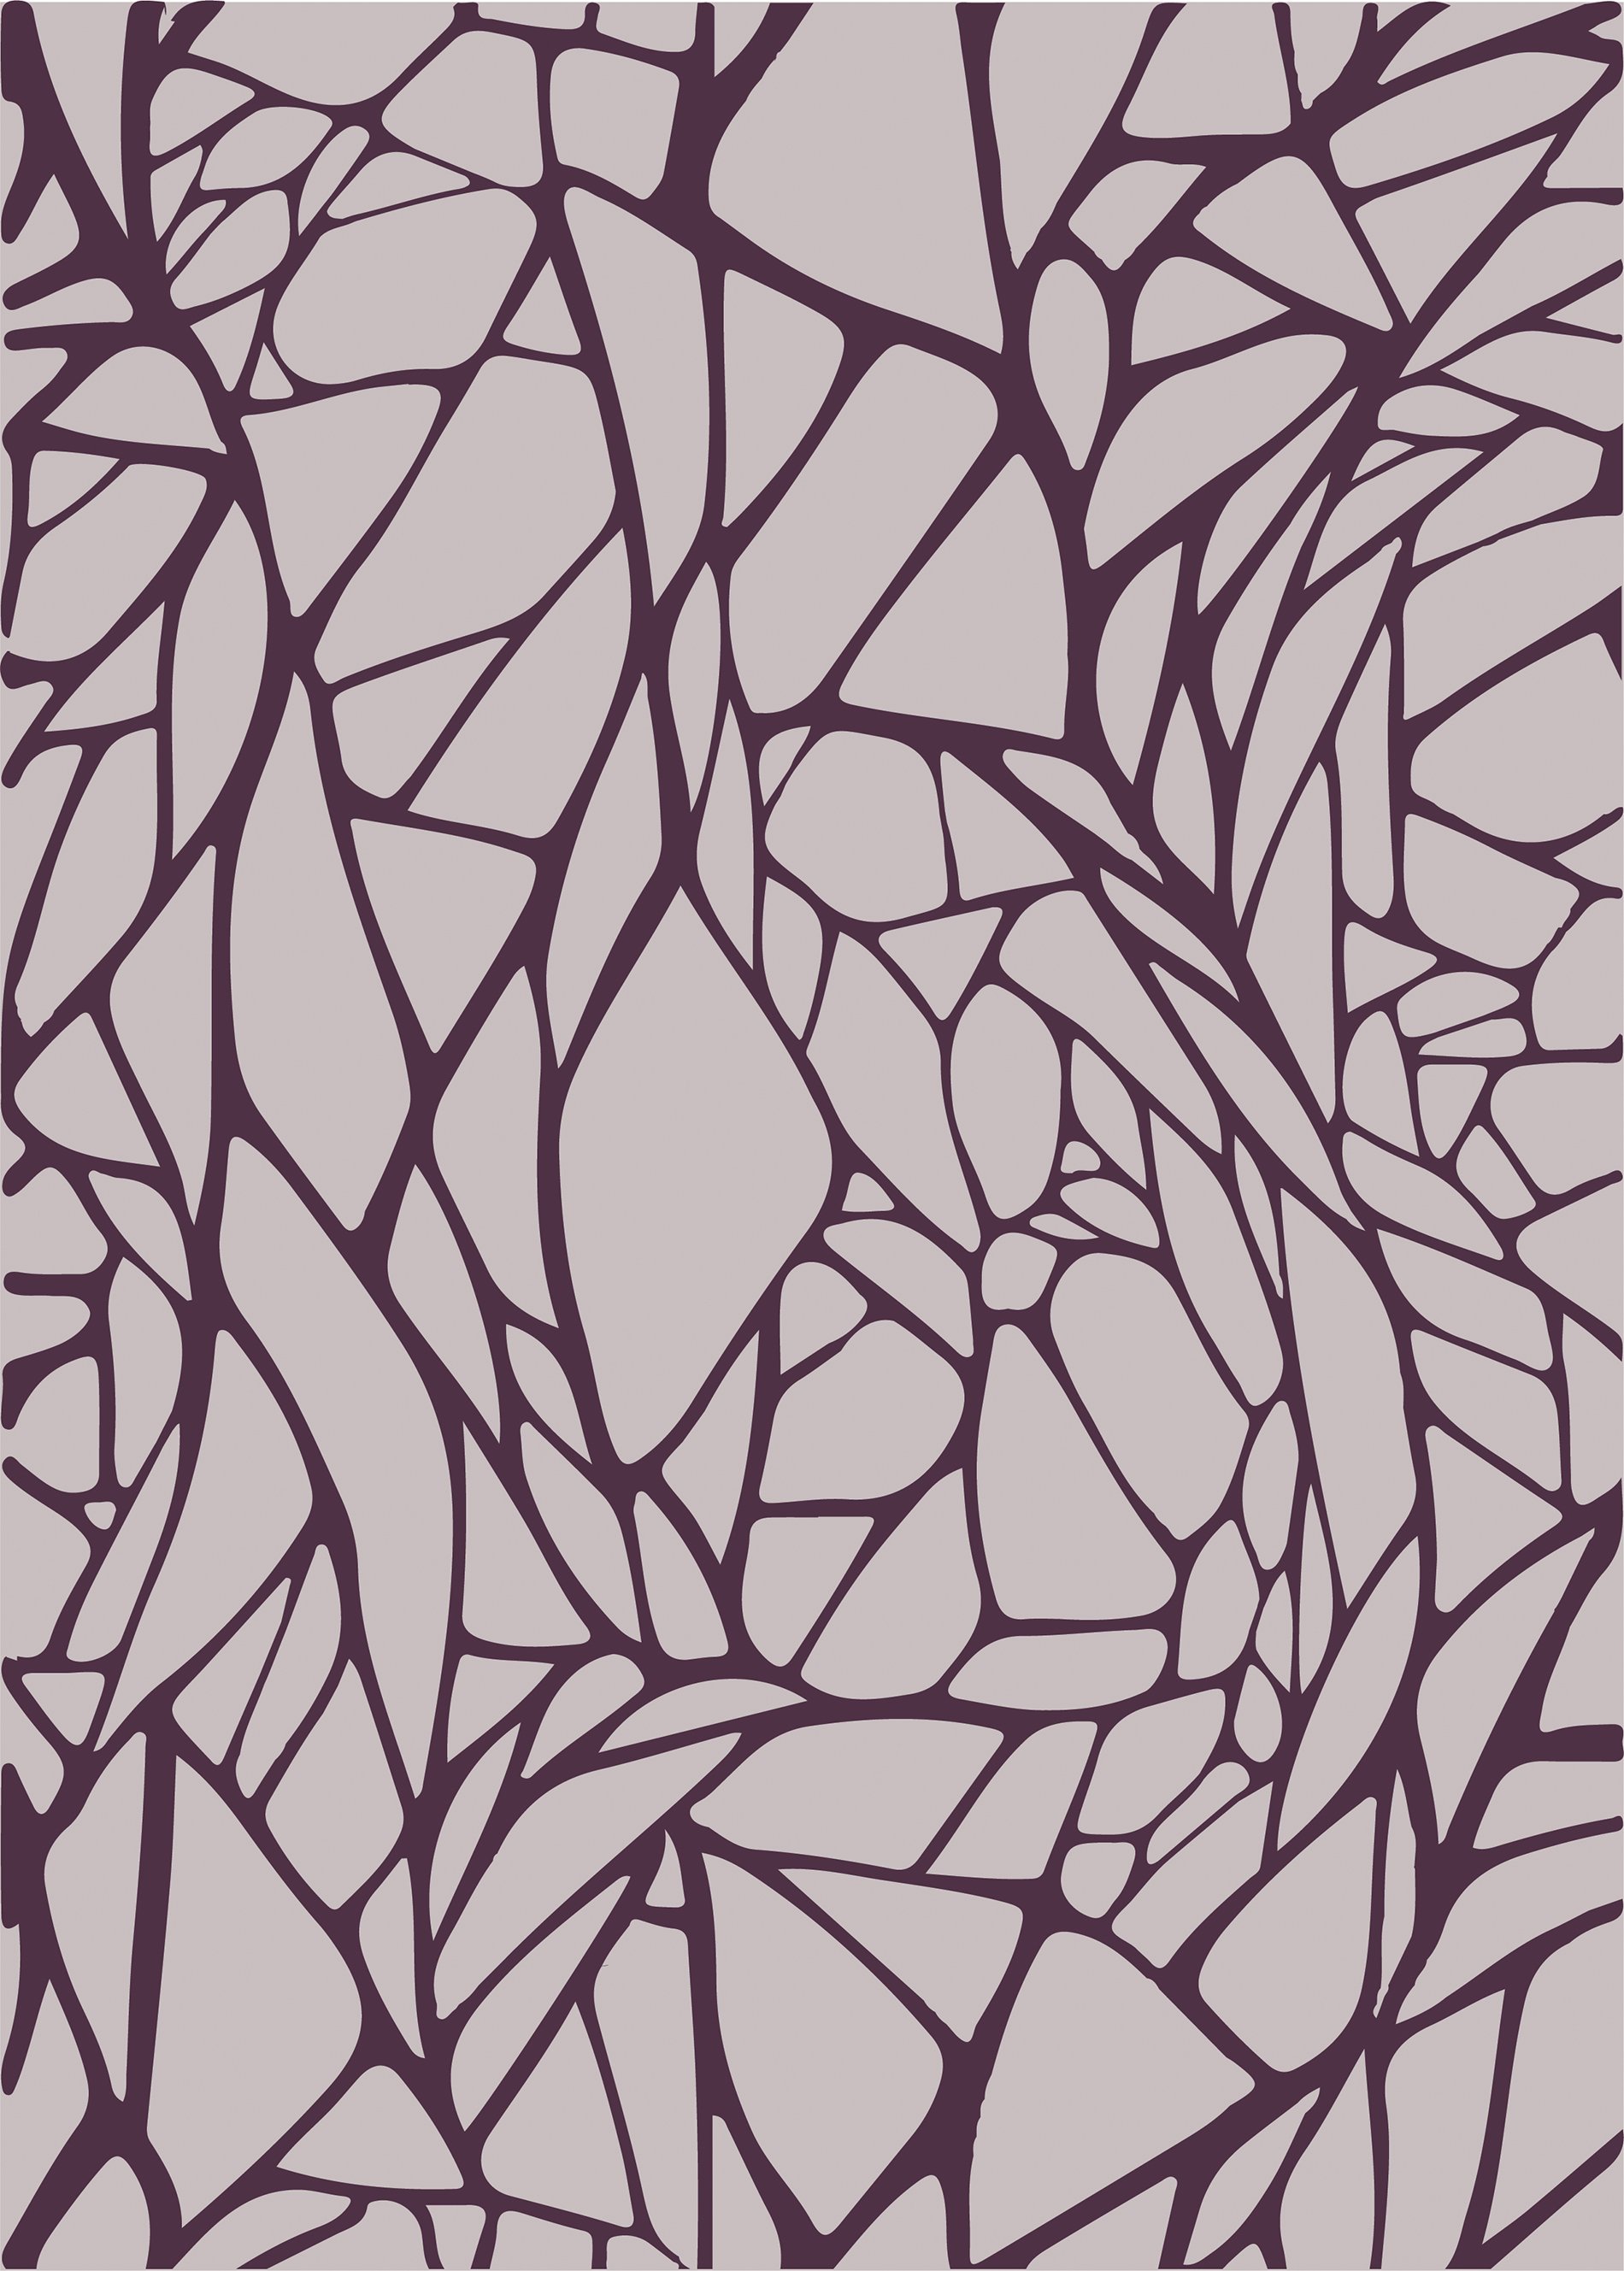 173/Fonds/Pattern-vegetal-contours.jpg